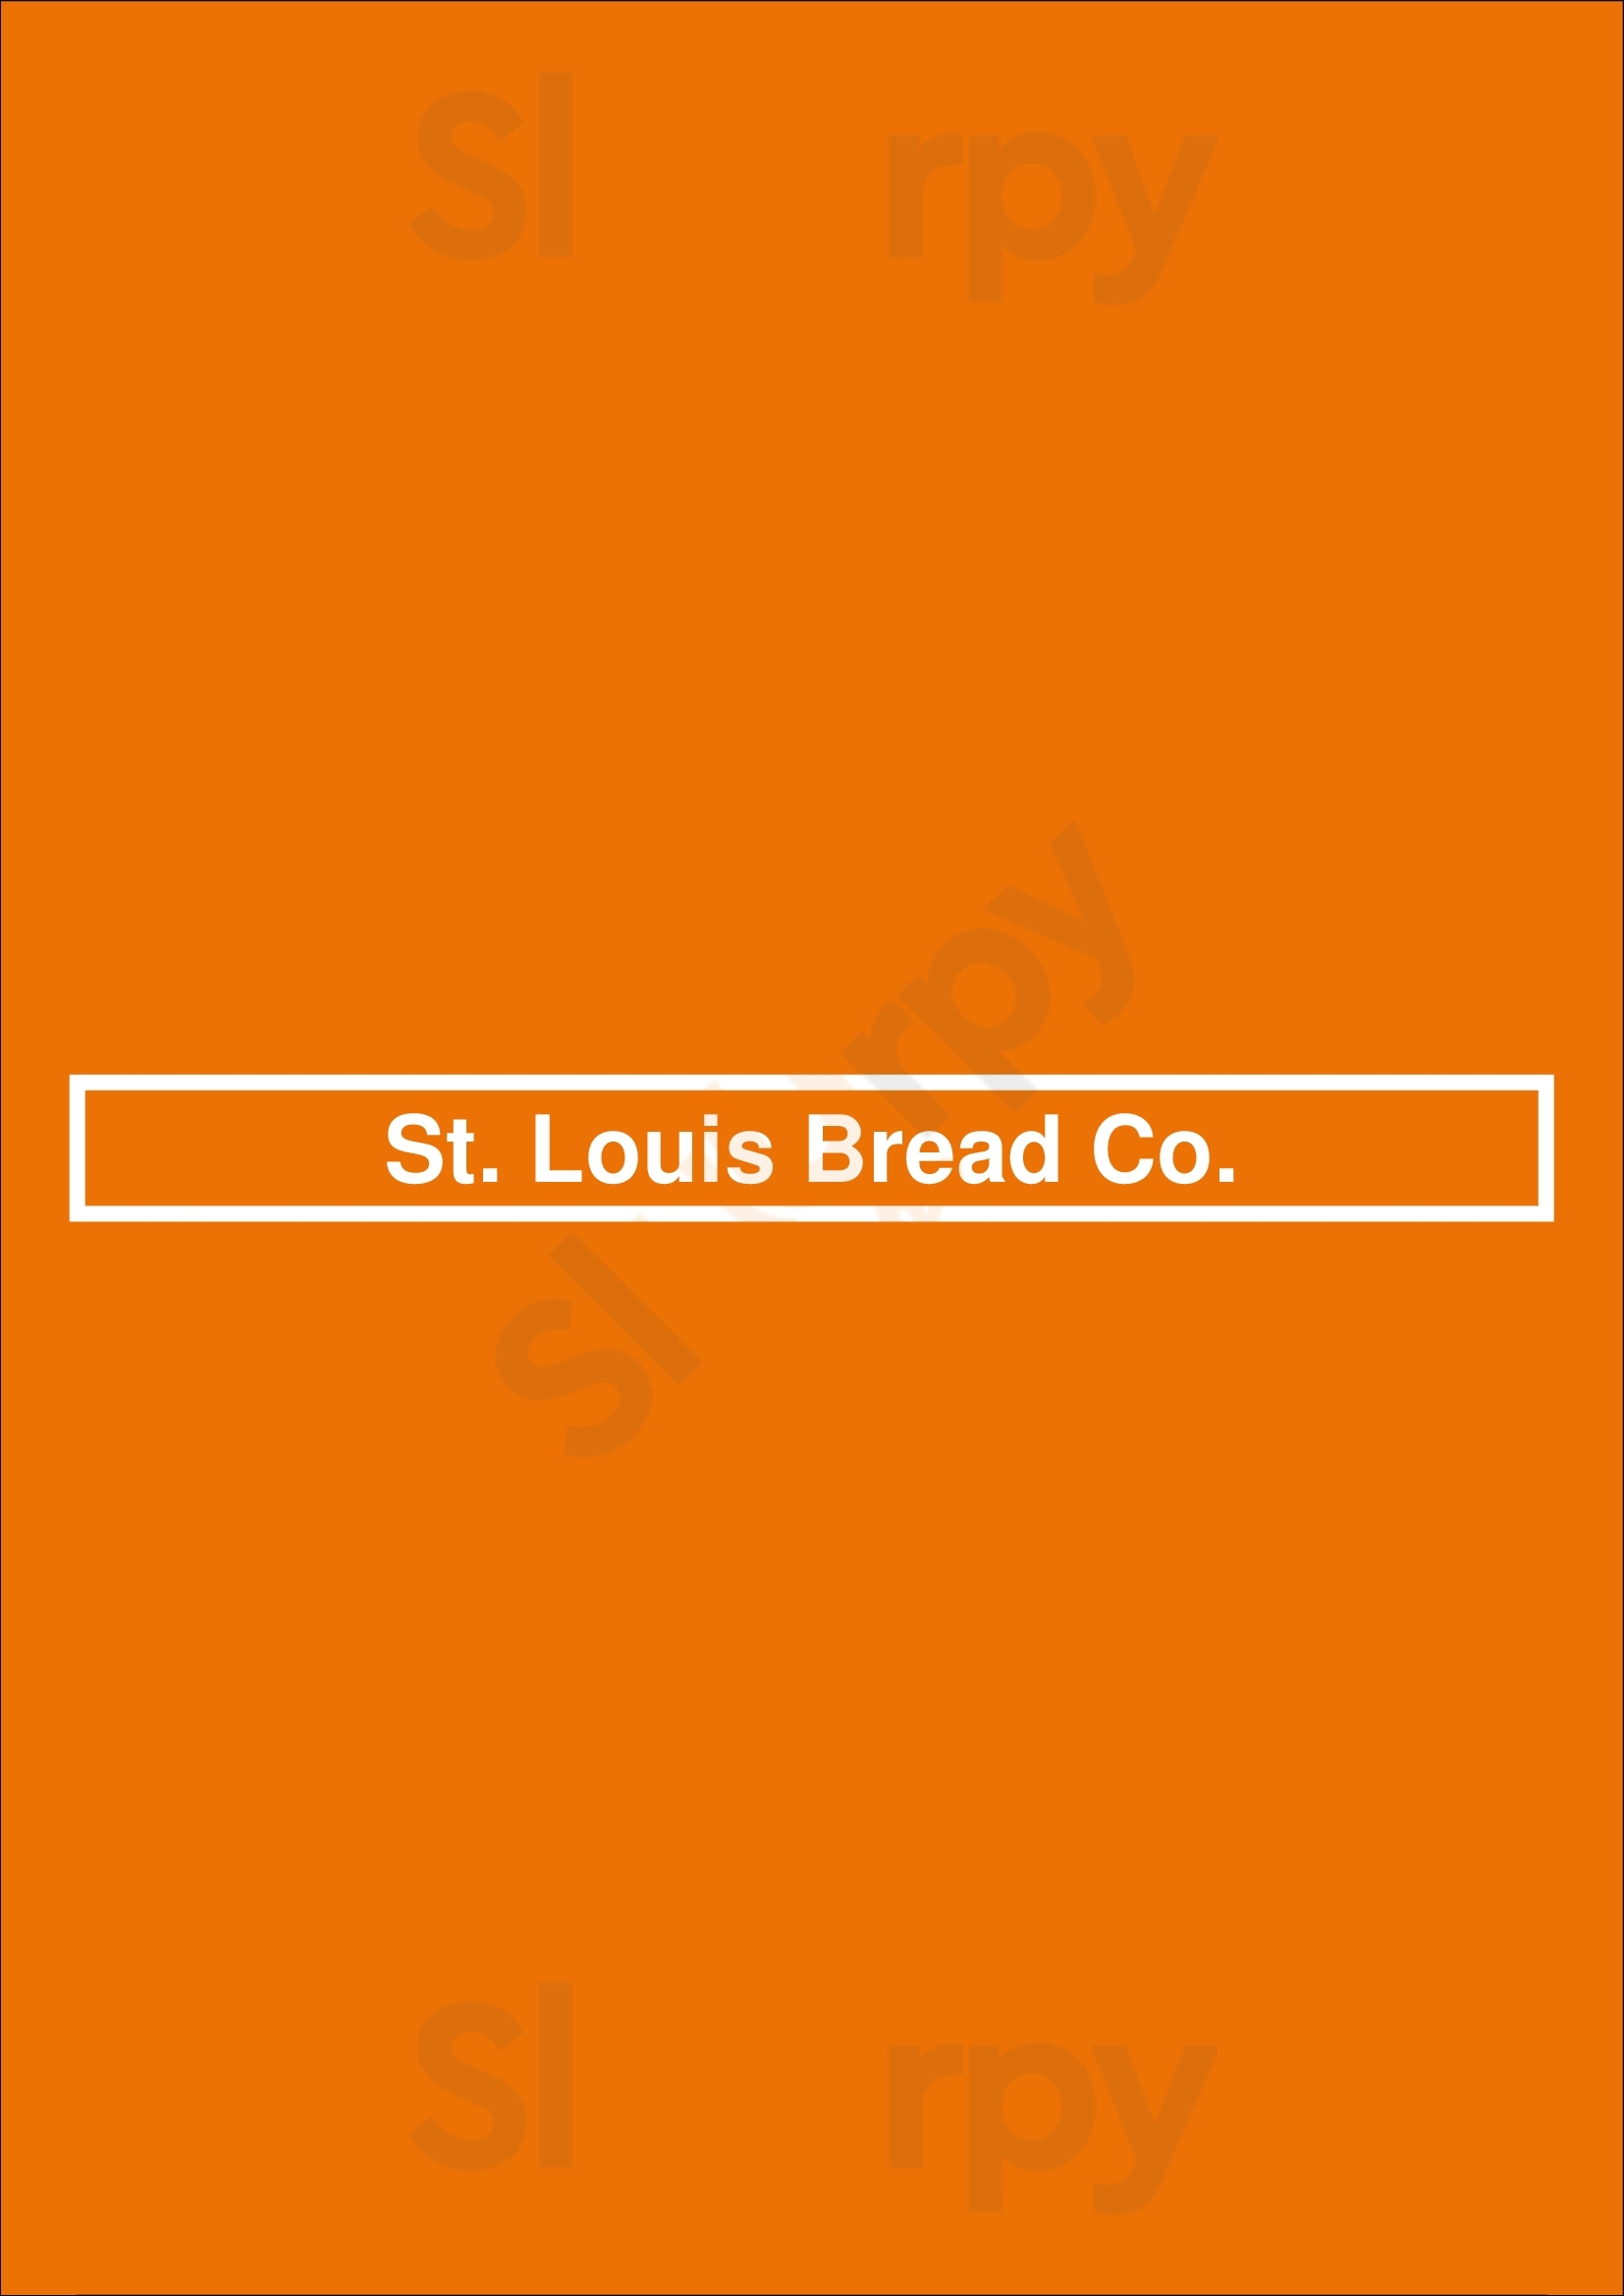 St. Louis Bread Co. Chesterfield Menu - 1